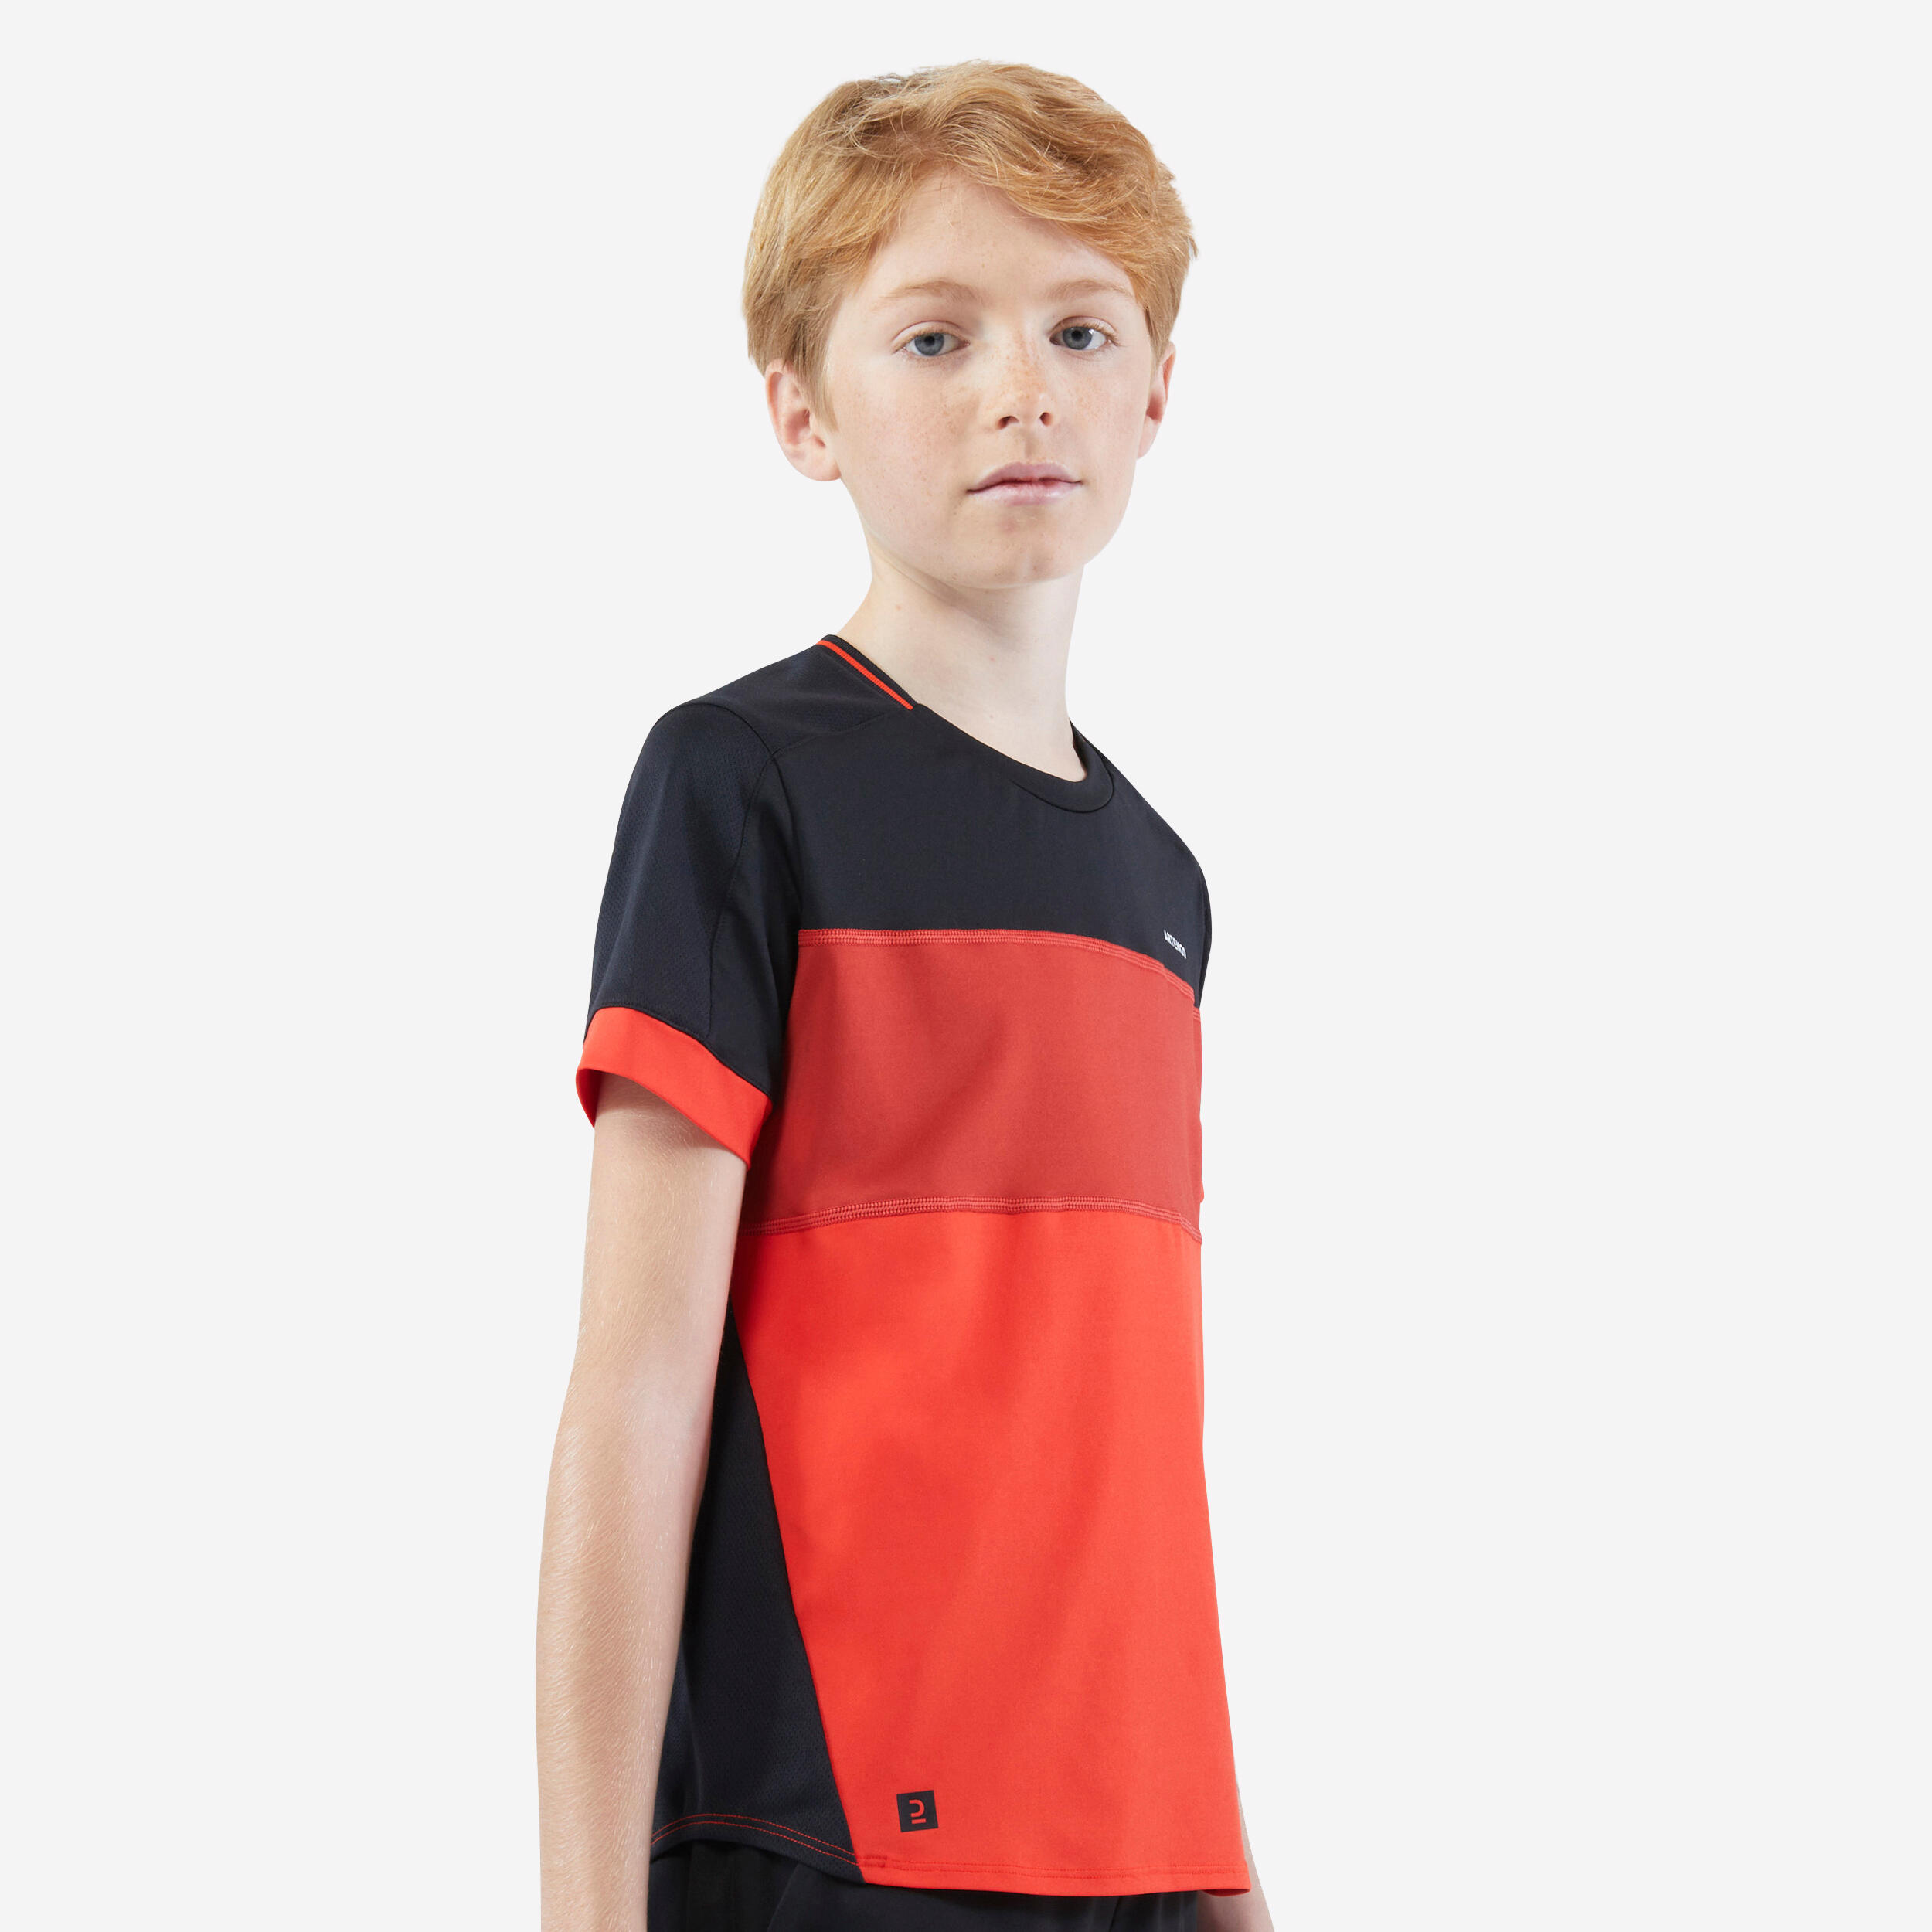 Decathlon | T-shirt tennis bambino TTS 500 DRY nero-rosso |  Artengo